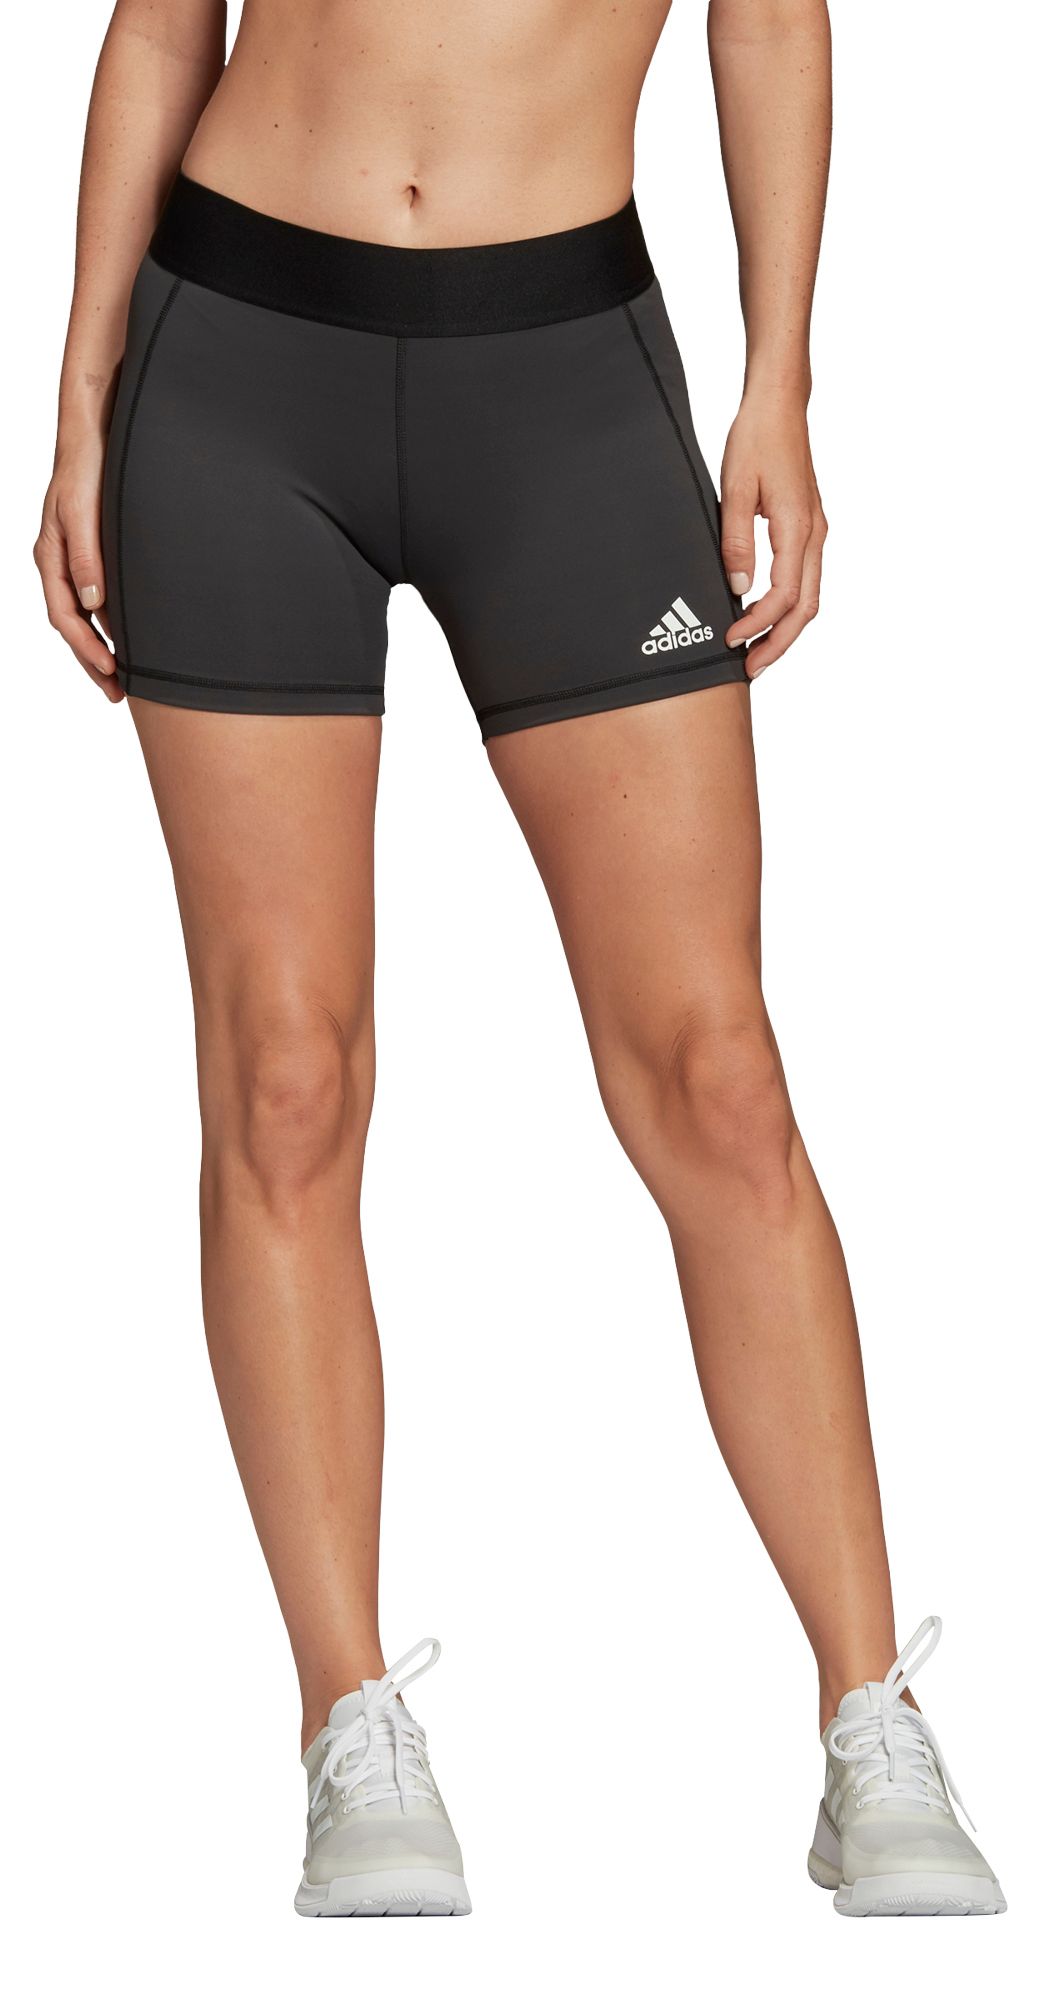 adidas Women's Alphaskin Short Volleyball Tights